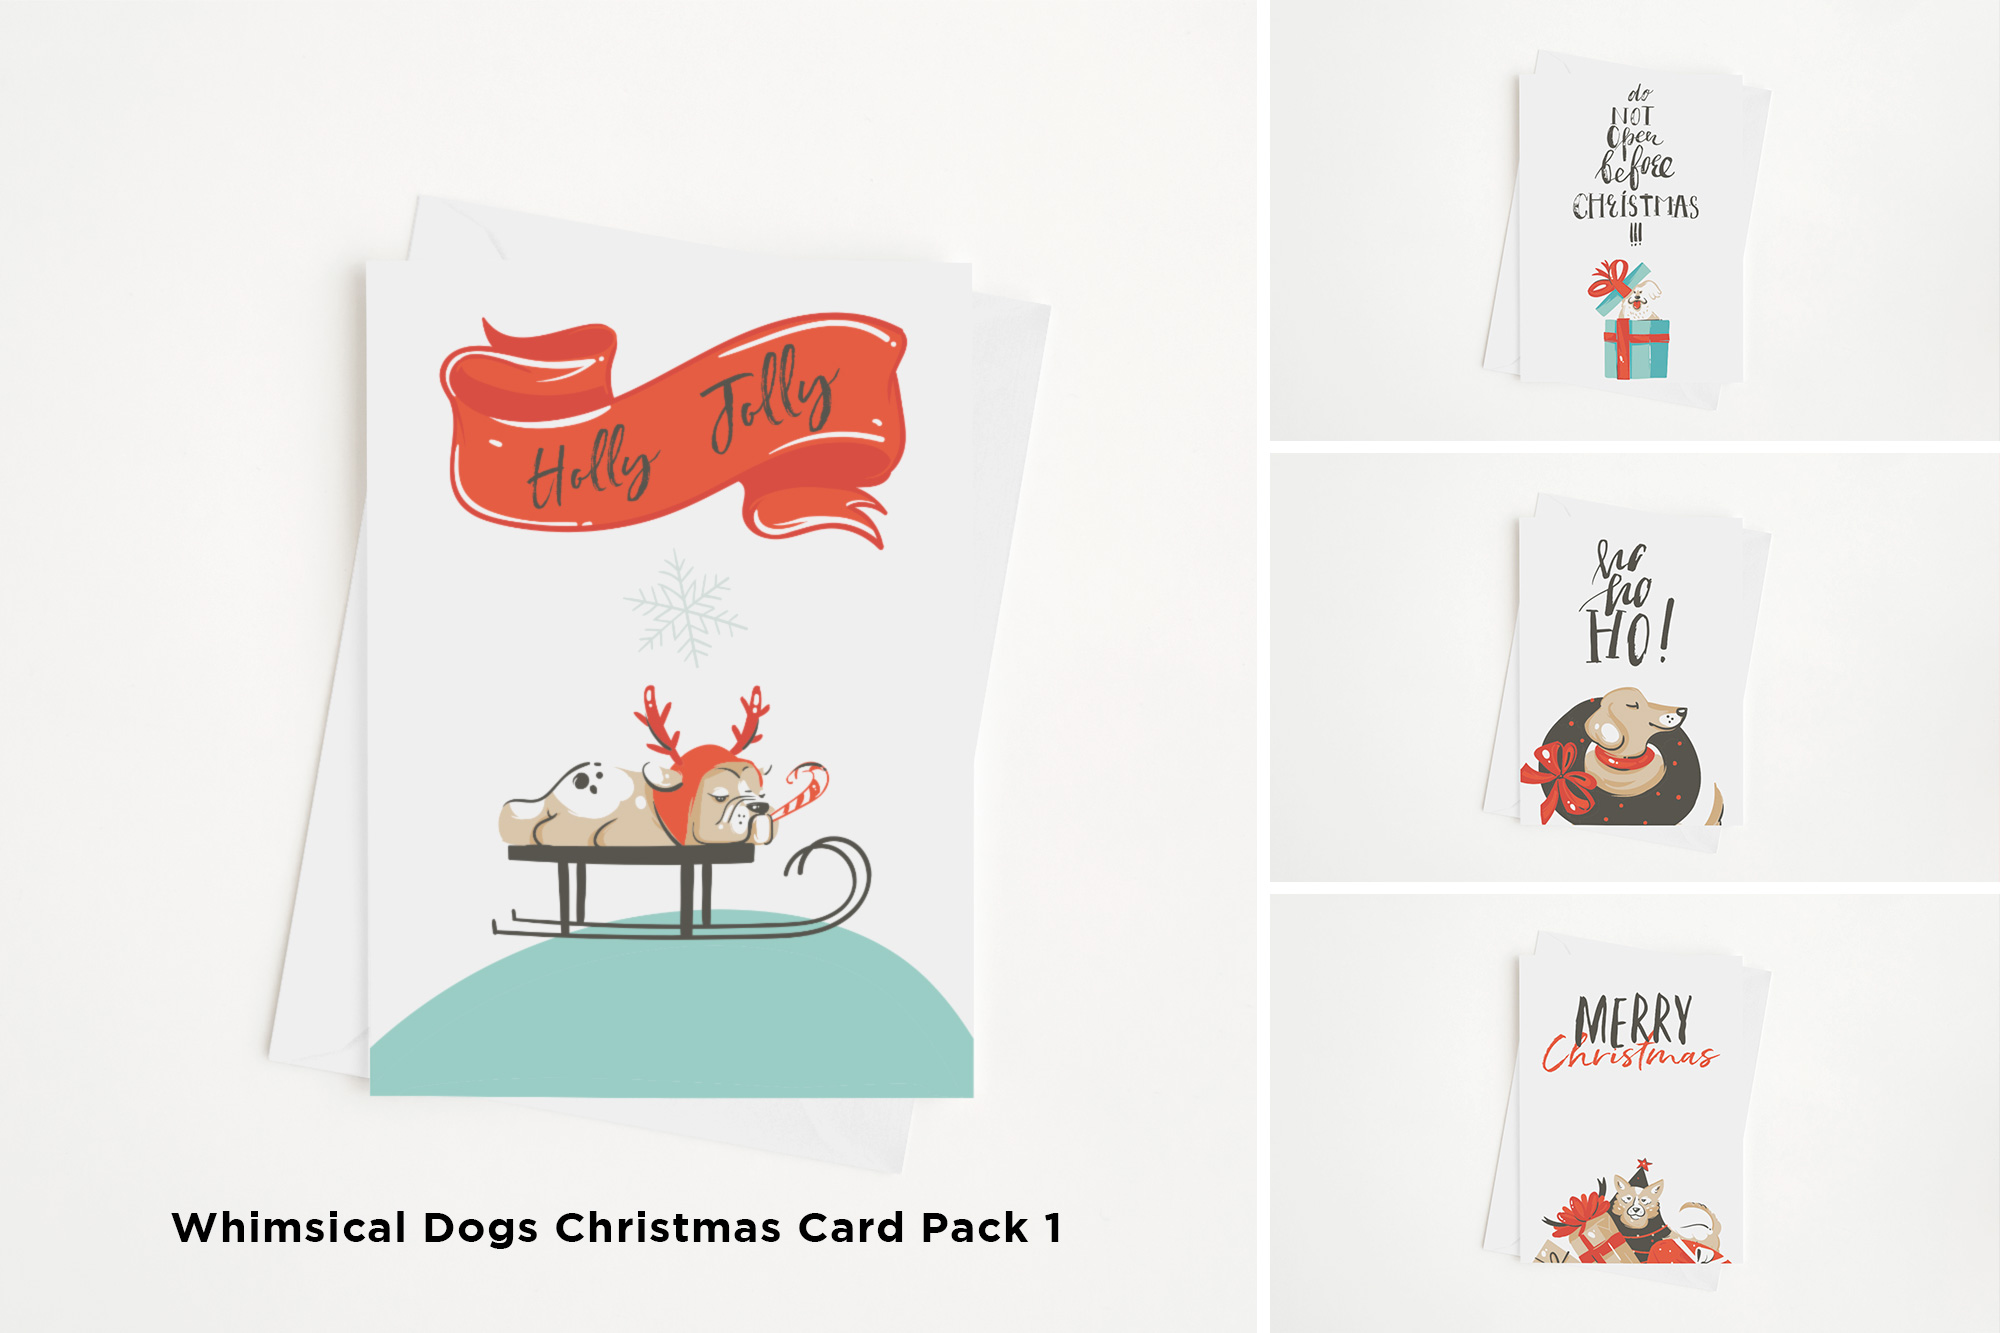 Whimsical Dogs Christmas Card Pack 1 Mockup